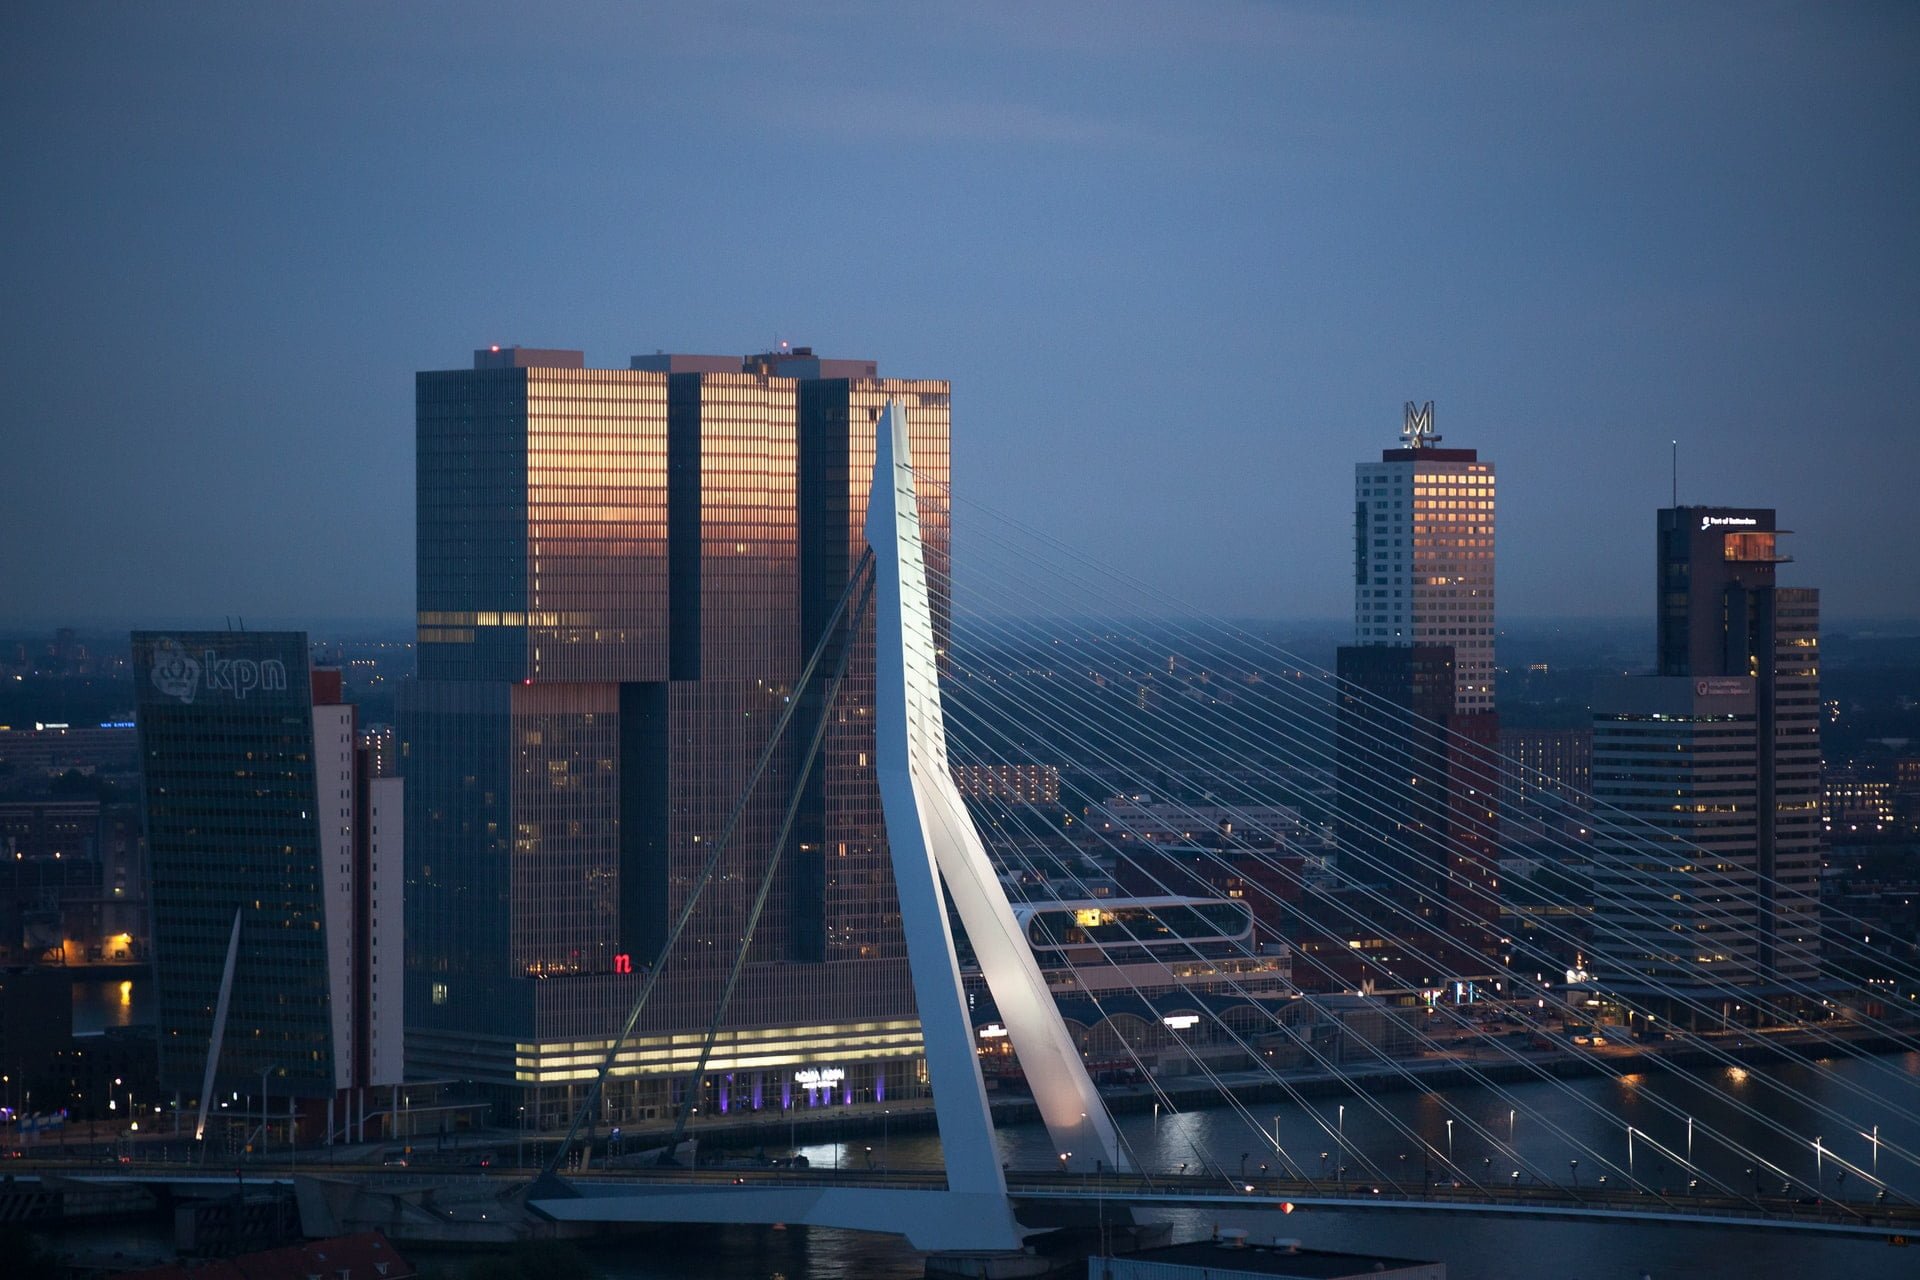 Rotterdam Hotspots Instagram account